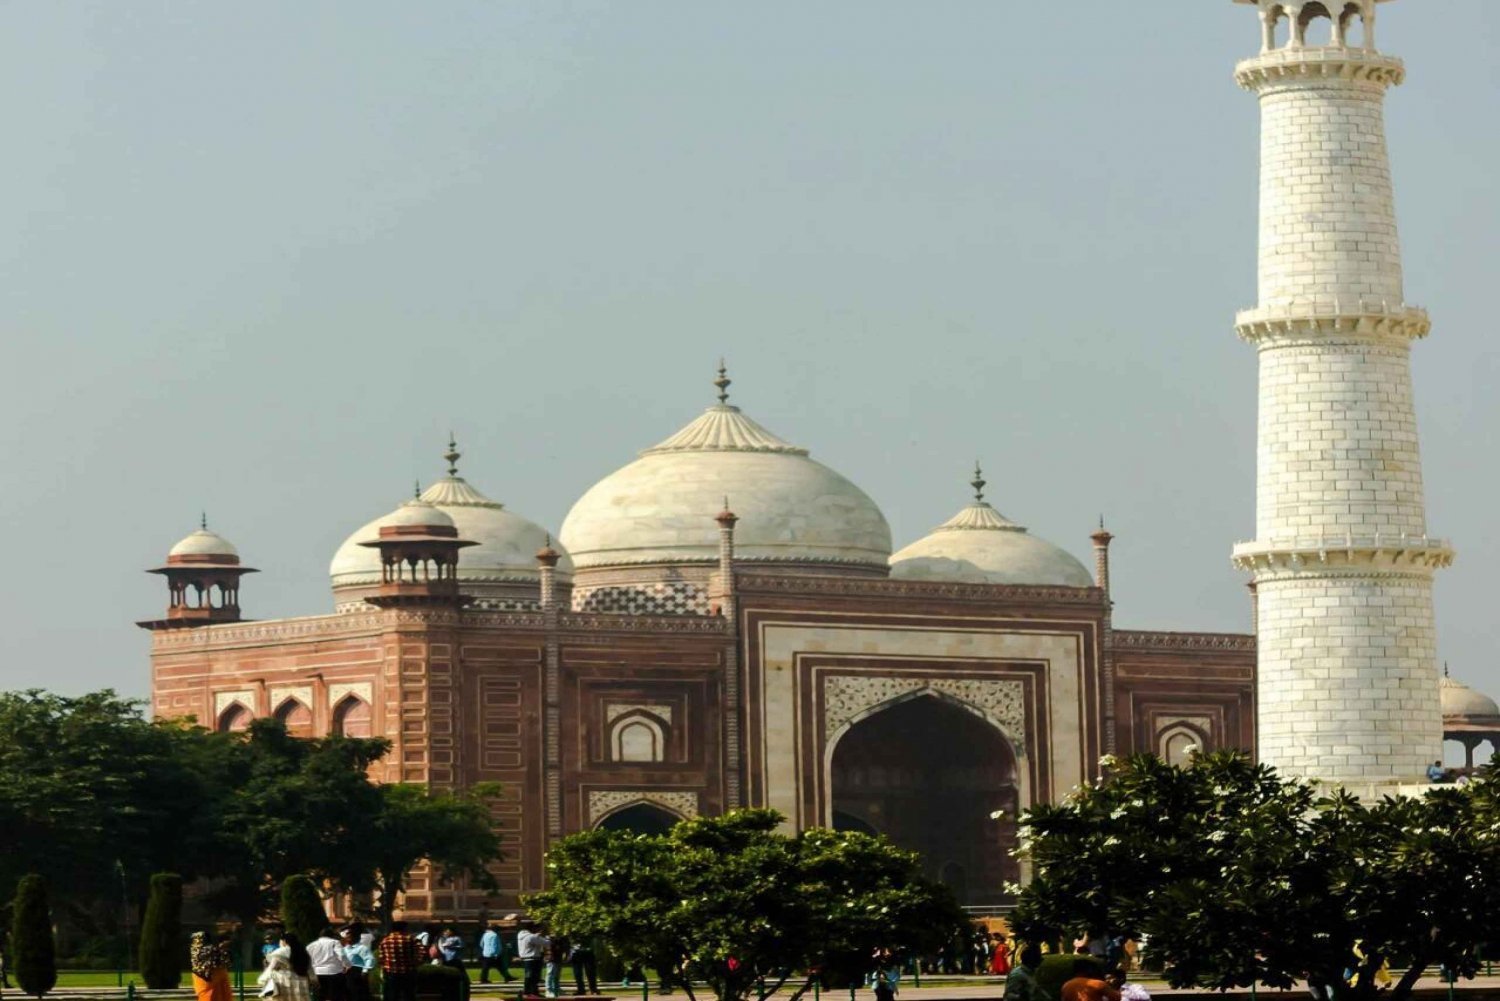 2 Day All Inclusive Taj Mahal & Agra City Tour From Mumbai